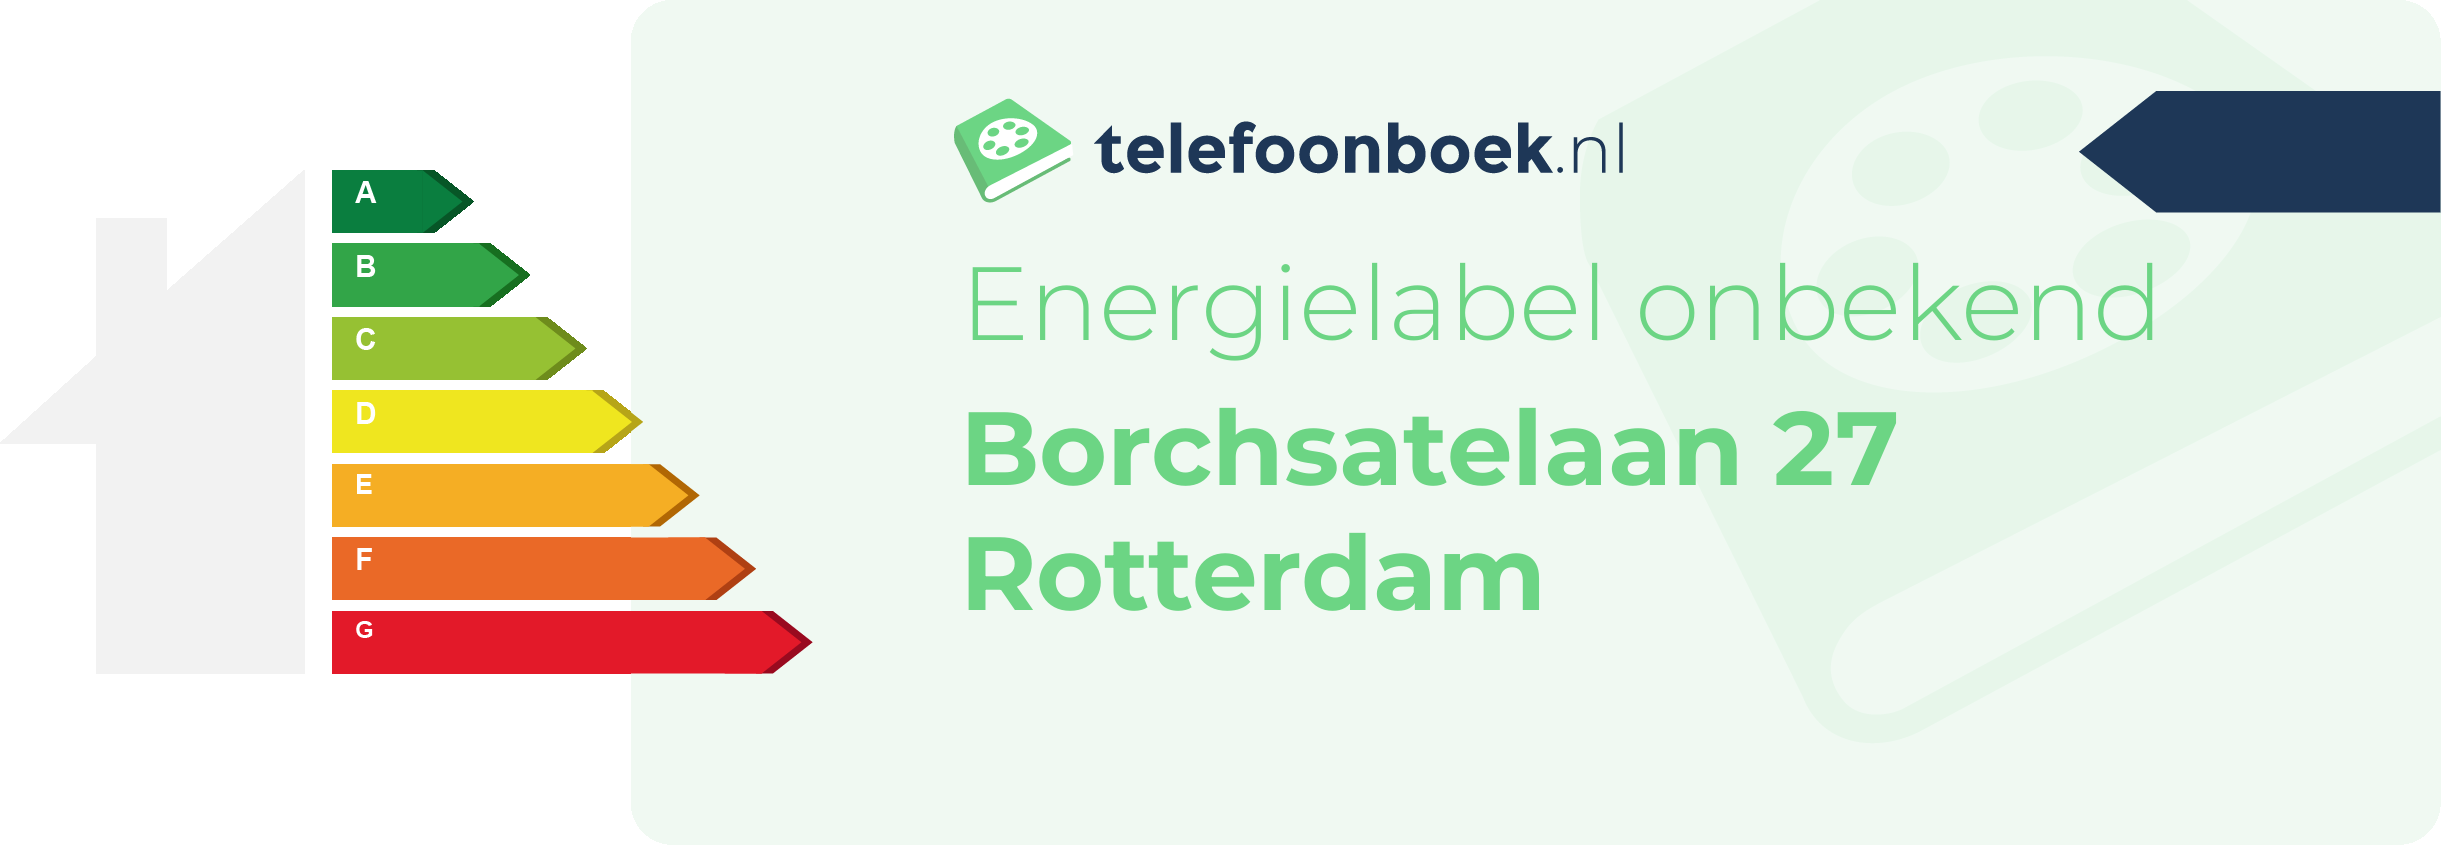 Energielabel Borchsatelaan 27 Rotterdam